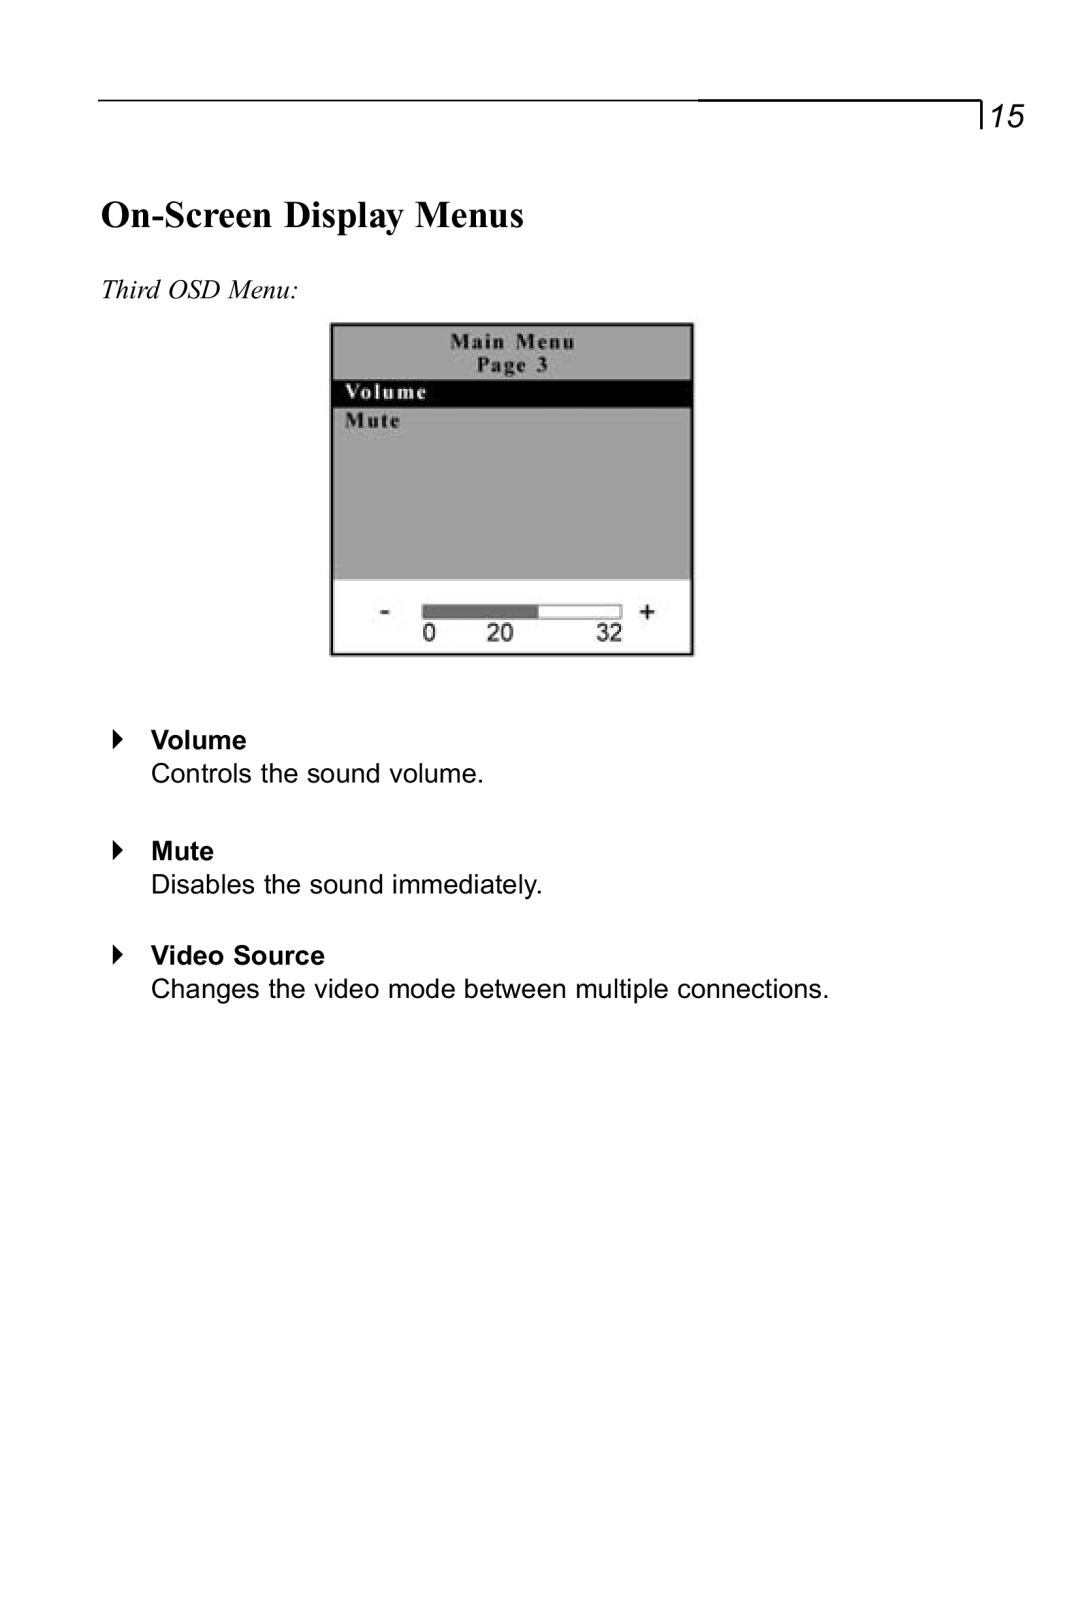 Planar LA1910RTC manual Volume, Mute, Video Source, On-Screen Display Menus, Controls the sound volume 